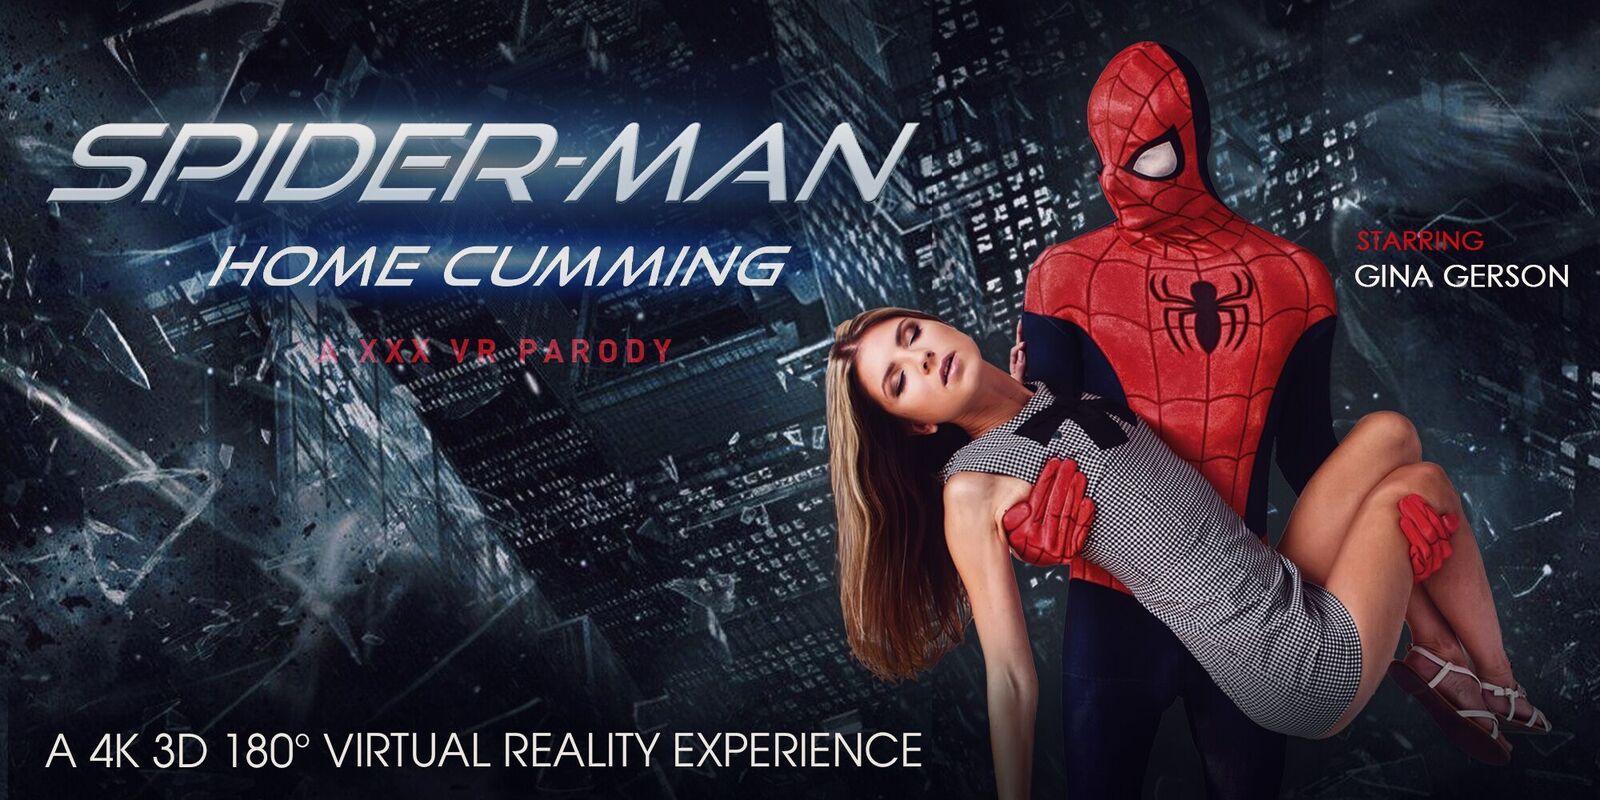 Spider Man Home Cumming A Parody Gina Gerson